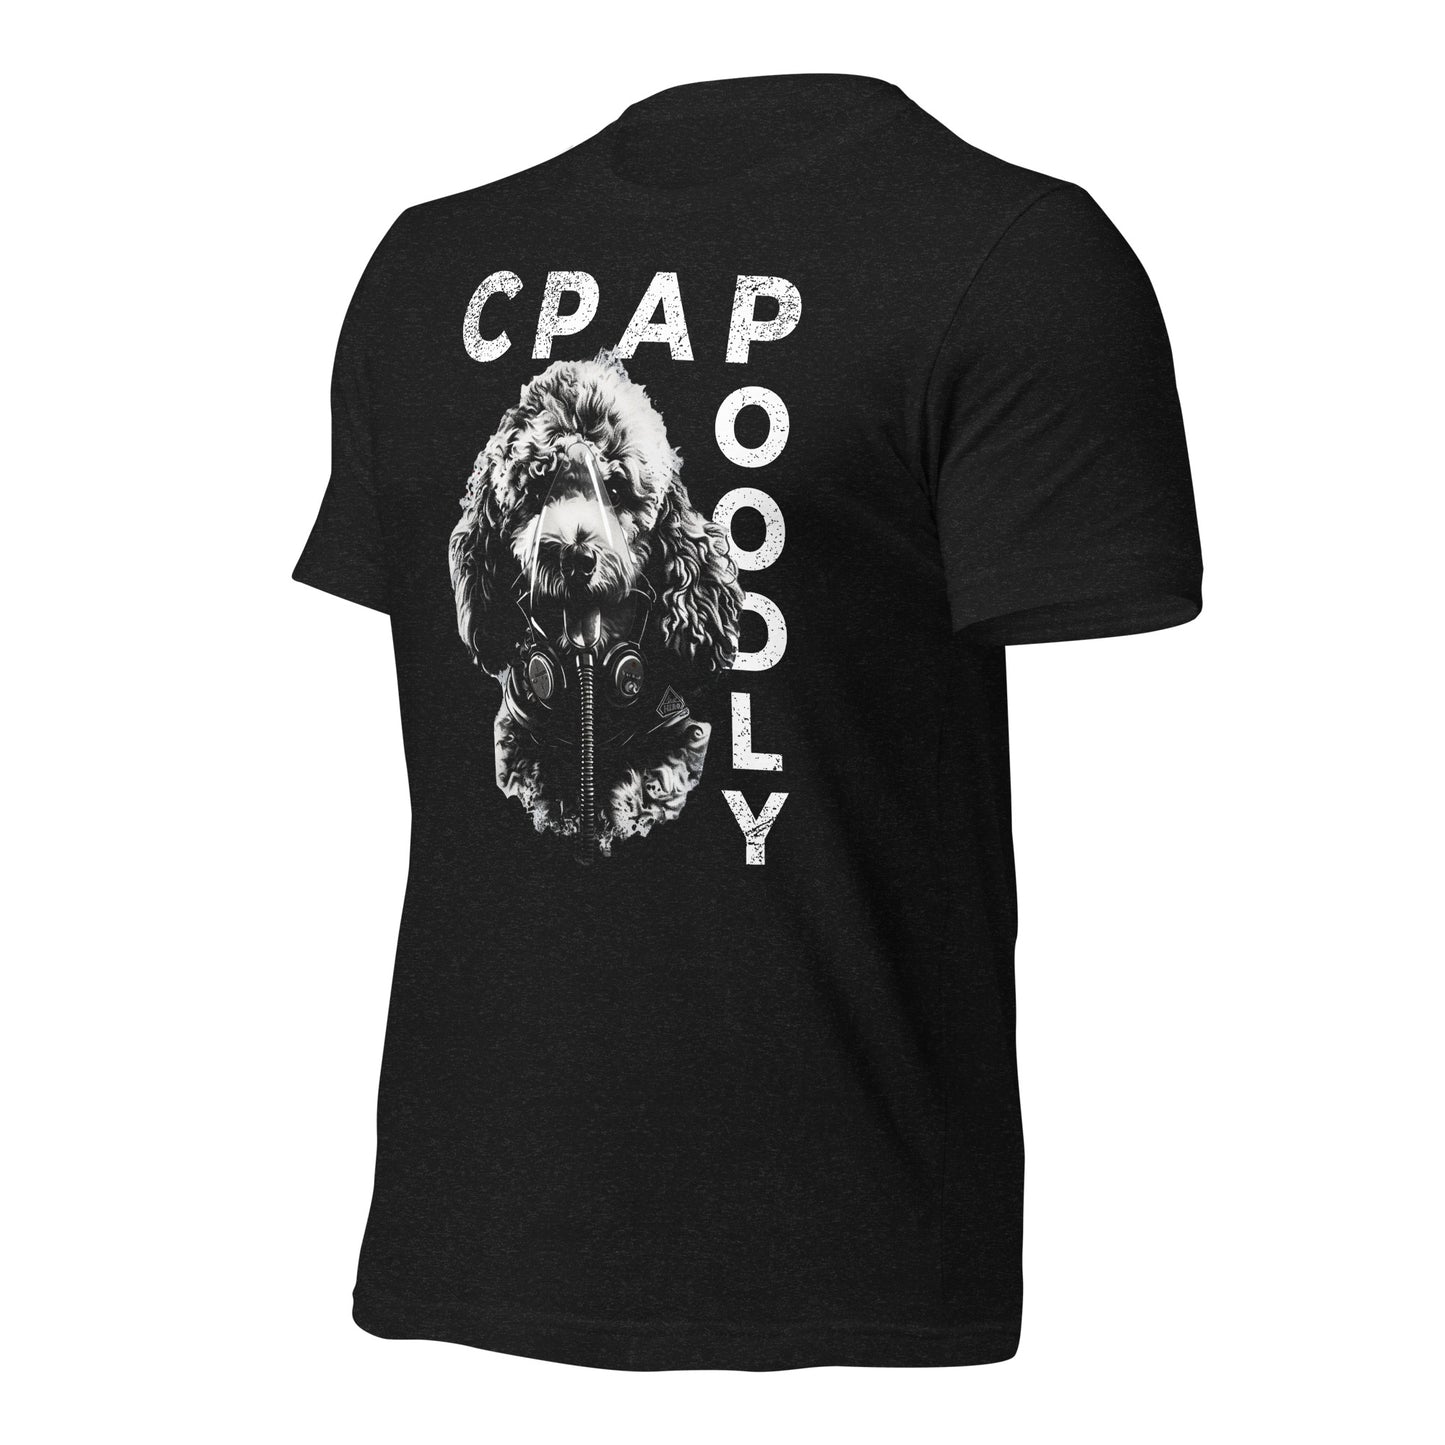 CPAPoodle, Poodle Wearing CPAP, CPAP, Animals, Sleep Apnea, Graphic Tee Shirt, Black